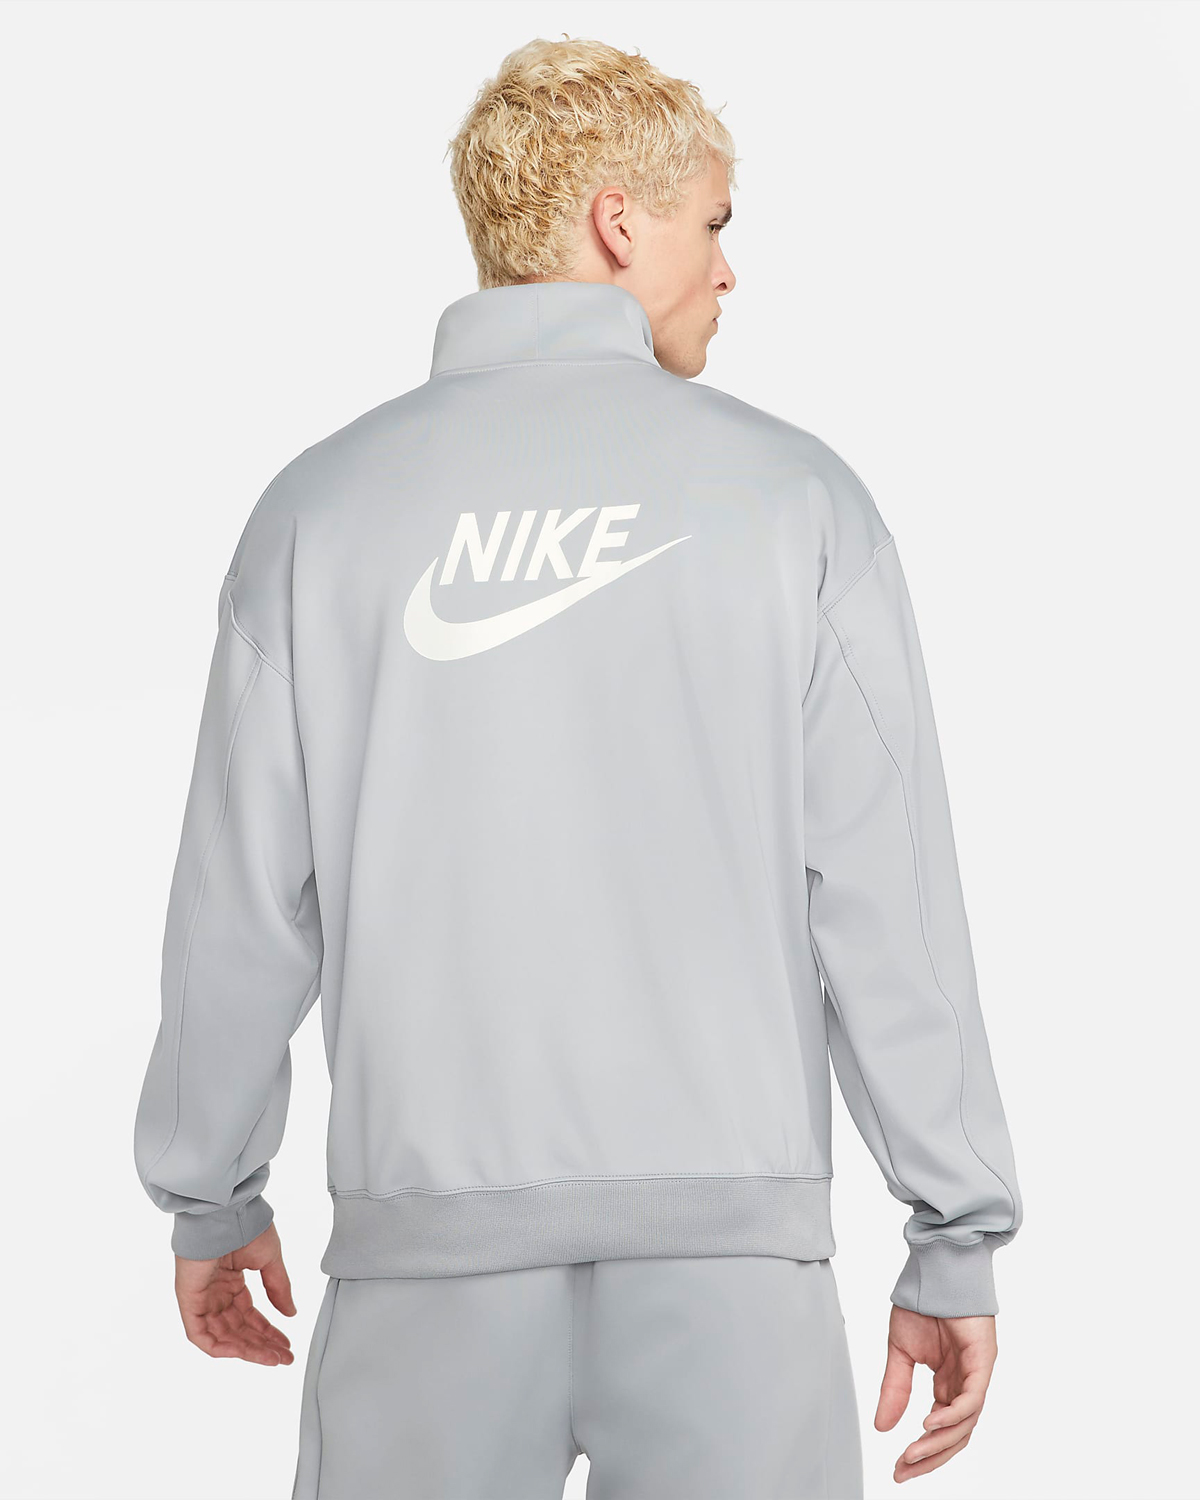 nike-sportswear-circa-half-zip-top-particle-grey-2